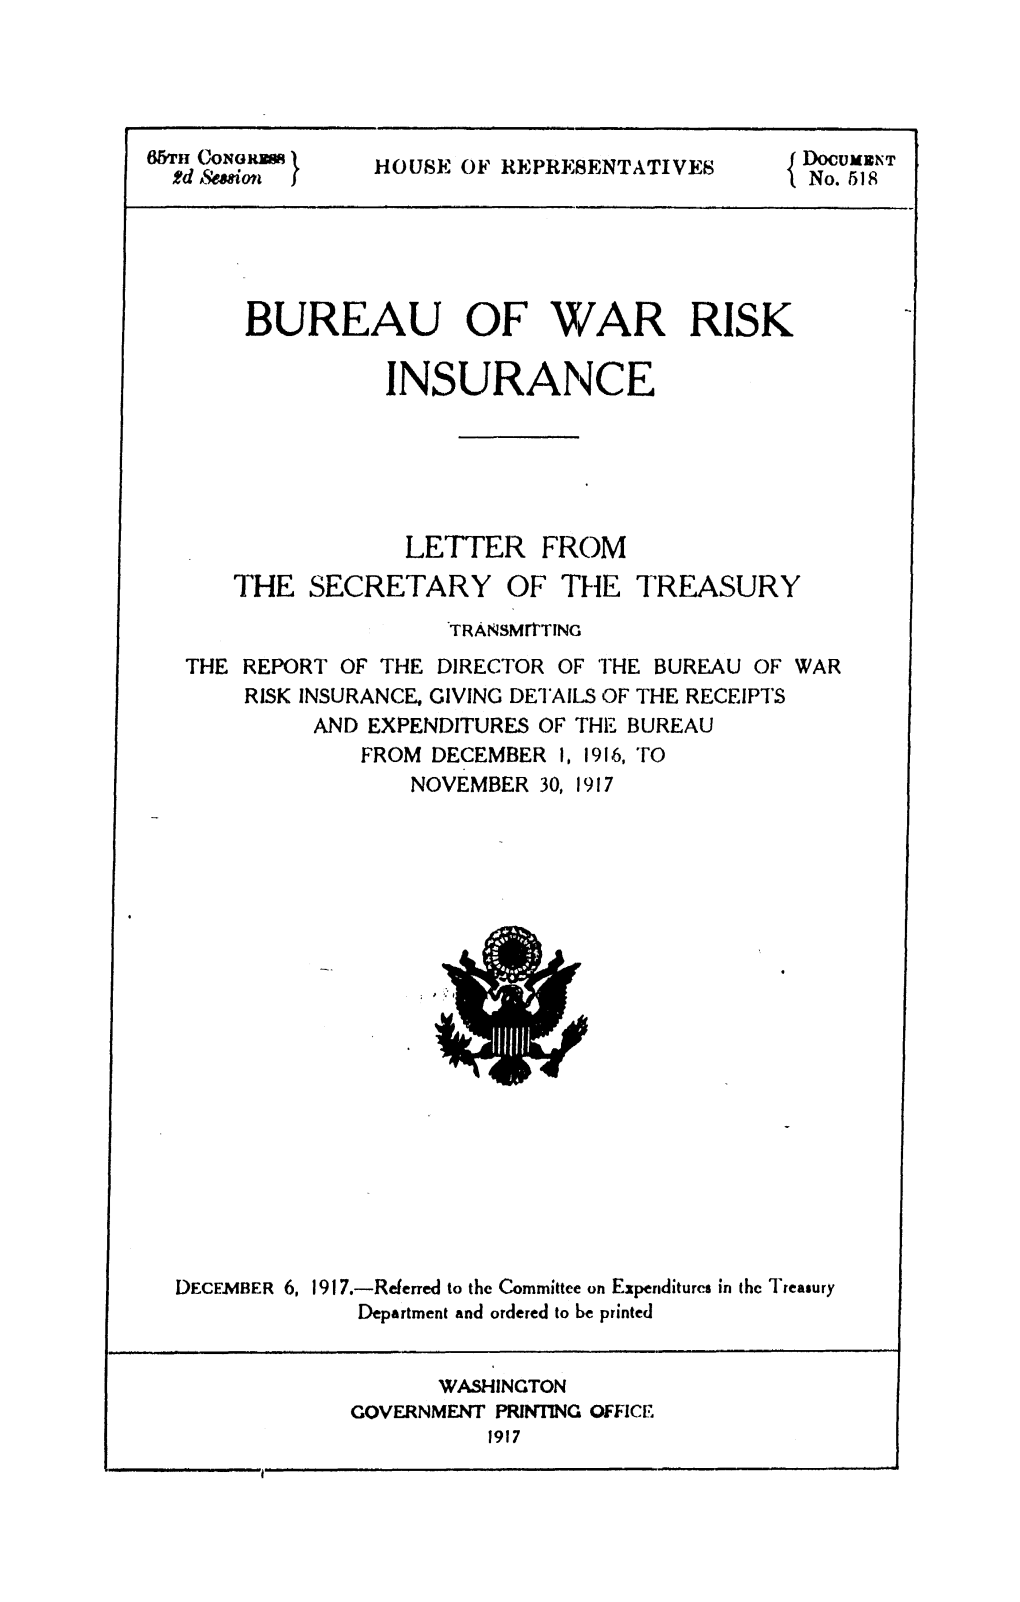 Bureau of War Risk Insurance